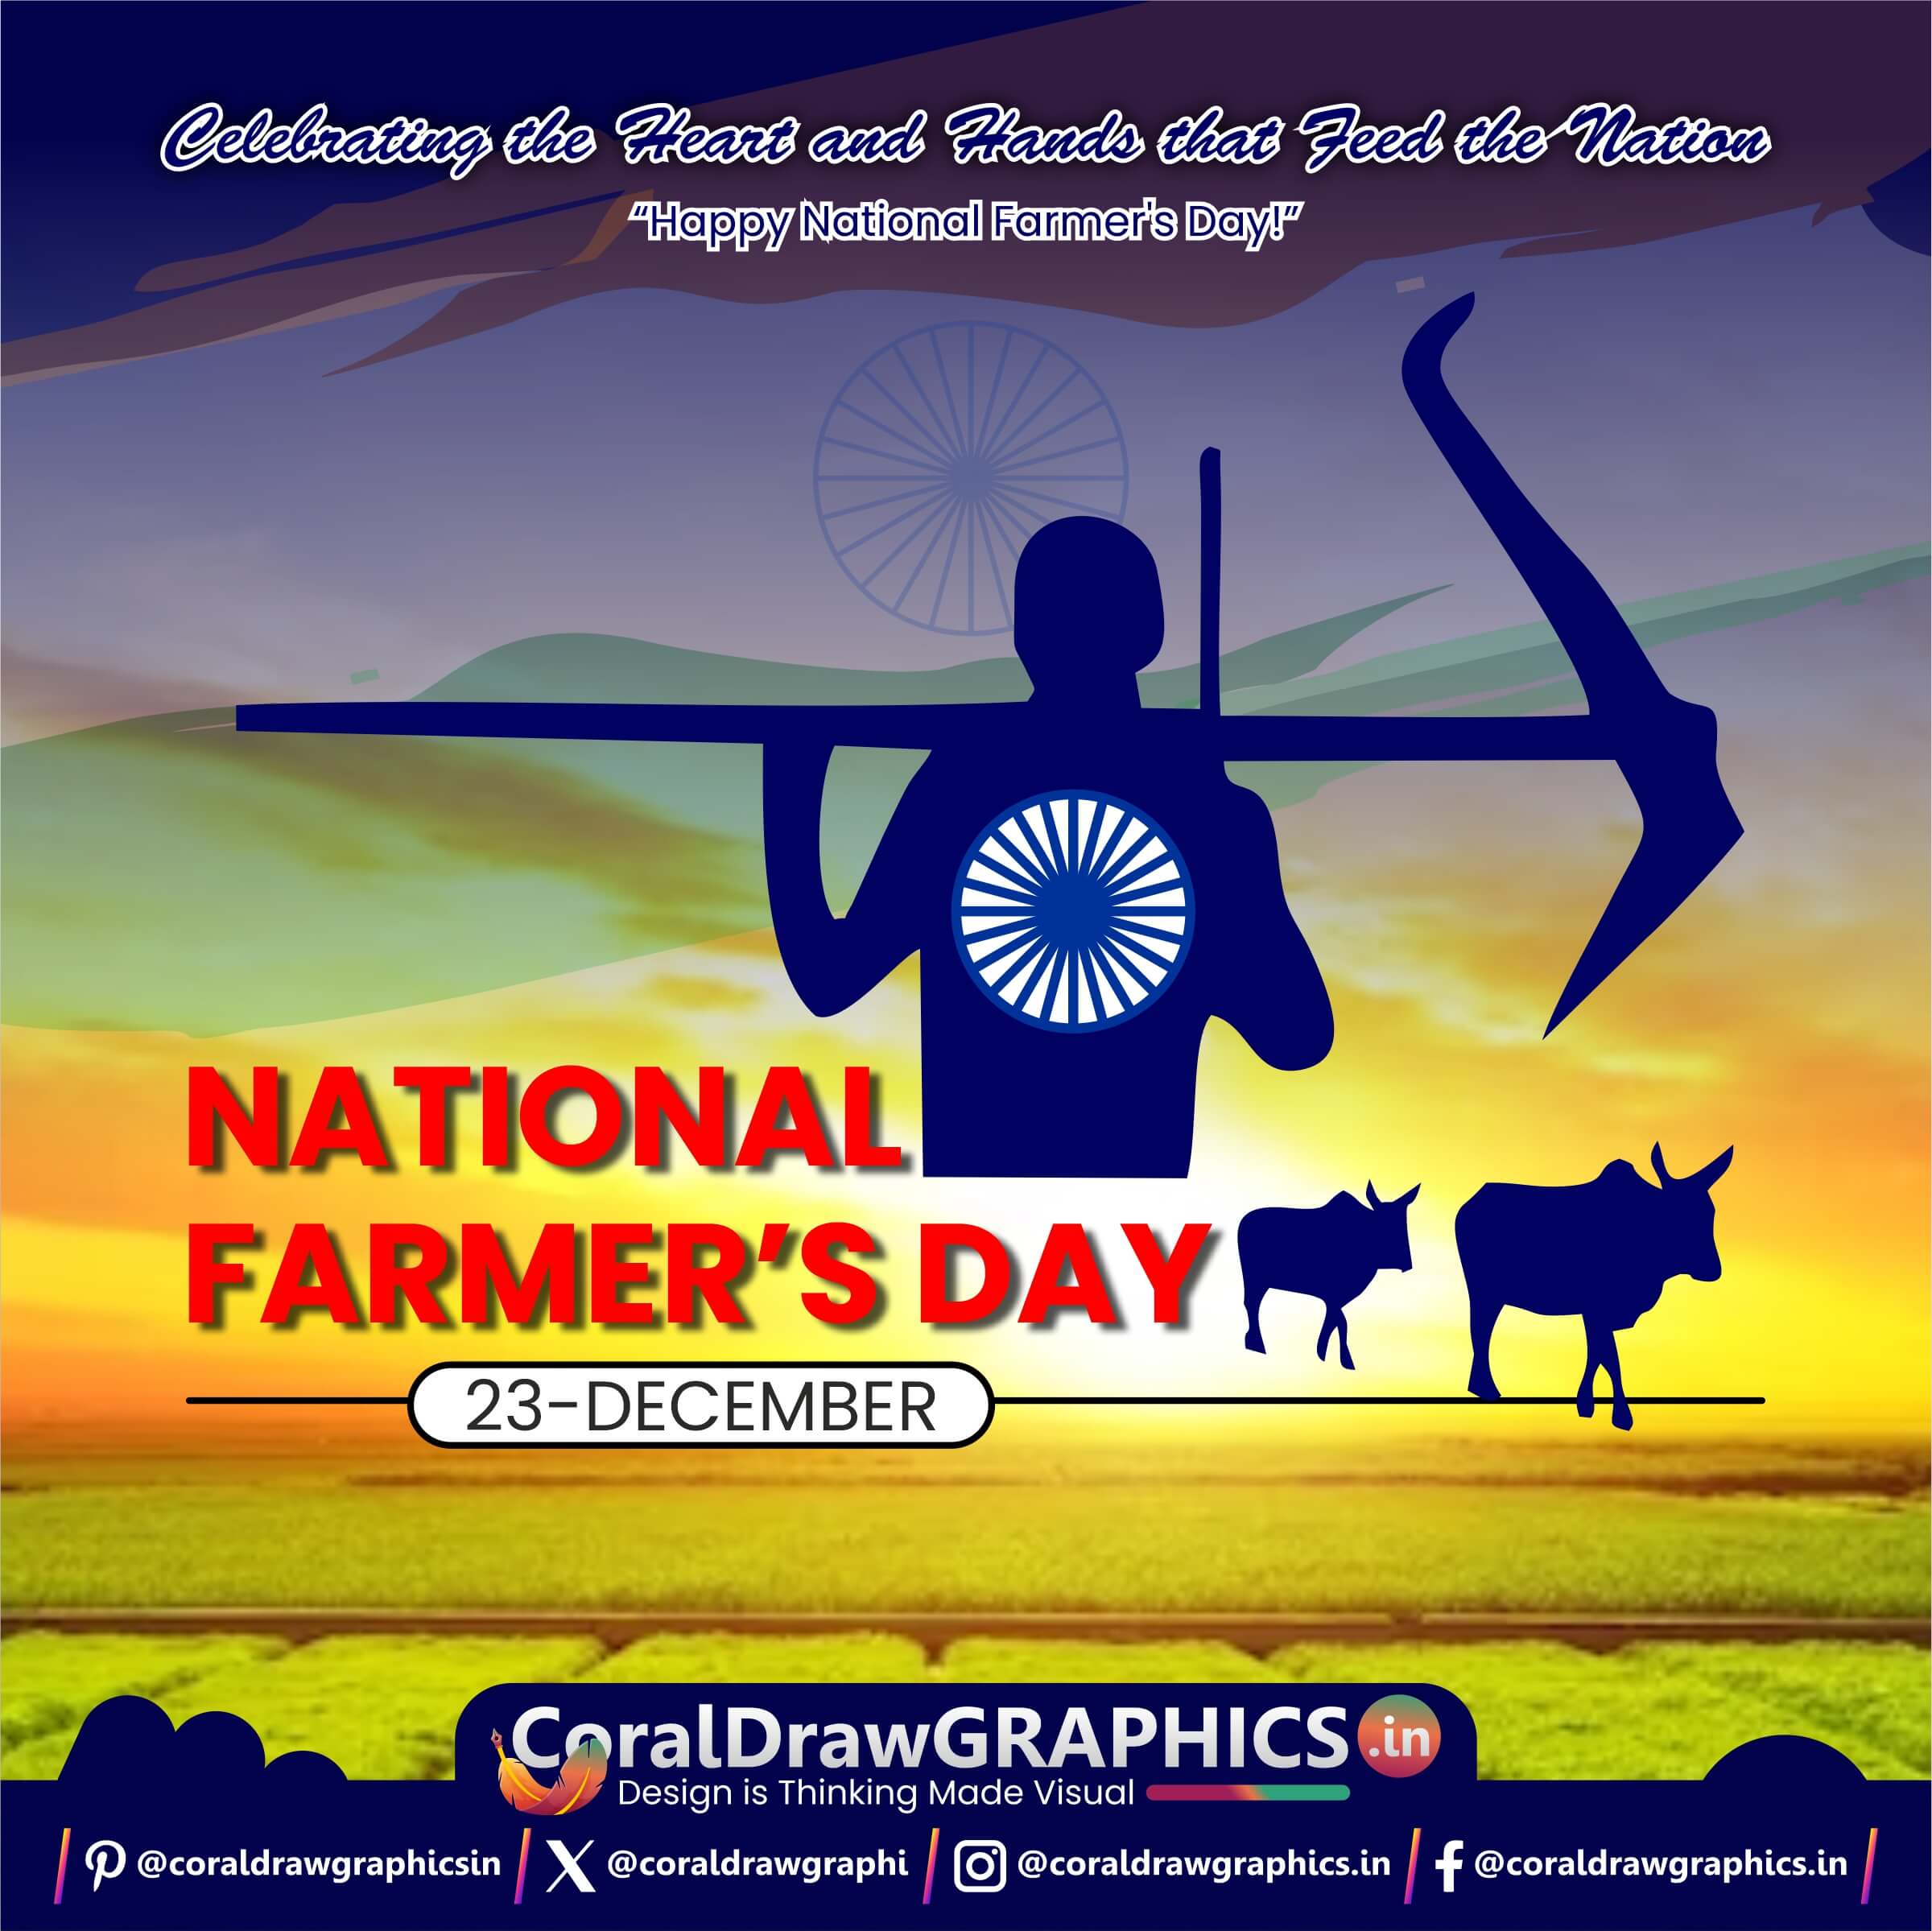 #SalutingTheFields 🌾🇮🇳 #HarvestingGratitude 🚜💚 #FarmersDayCelebration 🌱🌾 #HeartOfTheHarvest 🌾👩‍🌾 #FieldsOfHonour 🌽🇮🇳 #IndianFarmerPride 🚜🌾 #FeedingTheNation 🌾🥕 #AgriculturalHeroesDay 🚜💪 #SowingSuccessStories 🌱👨‍🌾 #BountifulHarvestJoy 🌽🎉 #GratefulForFarmers 🚜🌾 #FieldsOfEndurance 🌱🇮🇳 #HarvestingHope 🌾🌞 #FarmingLegacyCelebration 🚜🌾 #IndianAgriculturePride 🇮🇳🌾 #FarmersDayInIndia 🚜💙 #CultivatingStrengths 🌾💪 #NurturingOurNation 🇮🇳🌱 #FieldsToFeastsCelebration 🌾🍲 #ThankAFarmerToday 🚜🙏